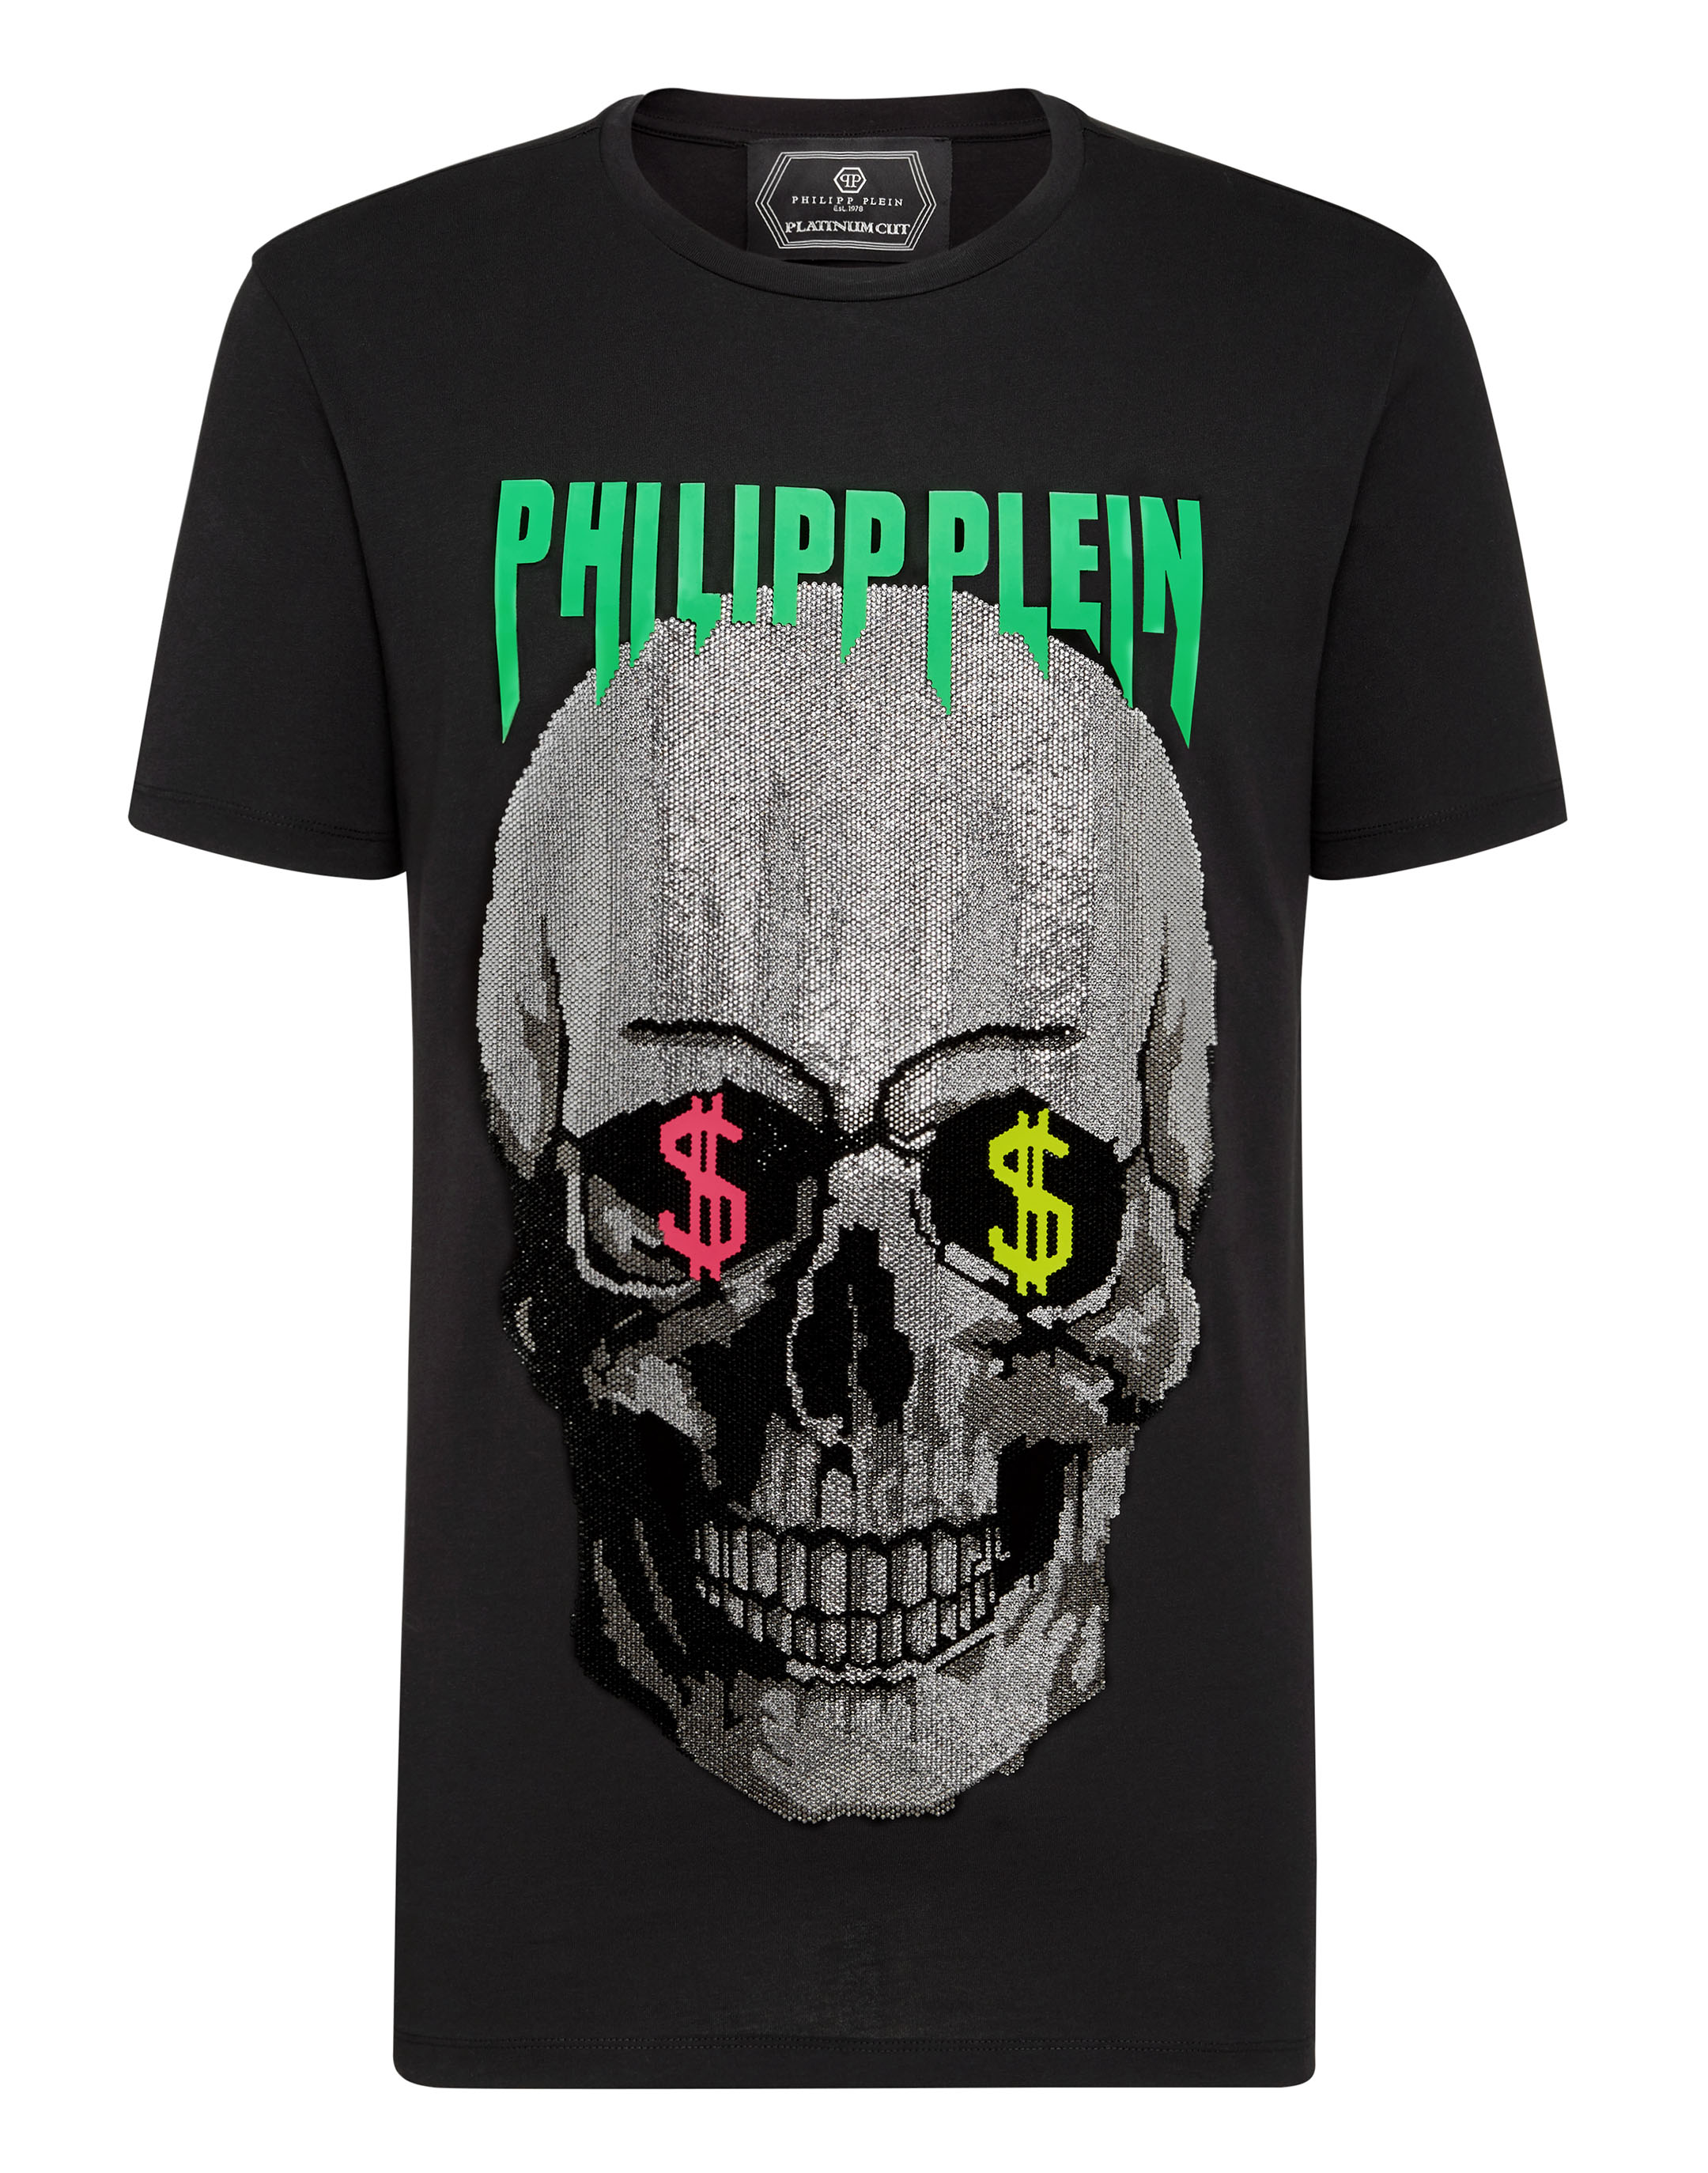 philipp plein t shirts online india